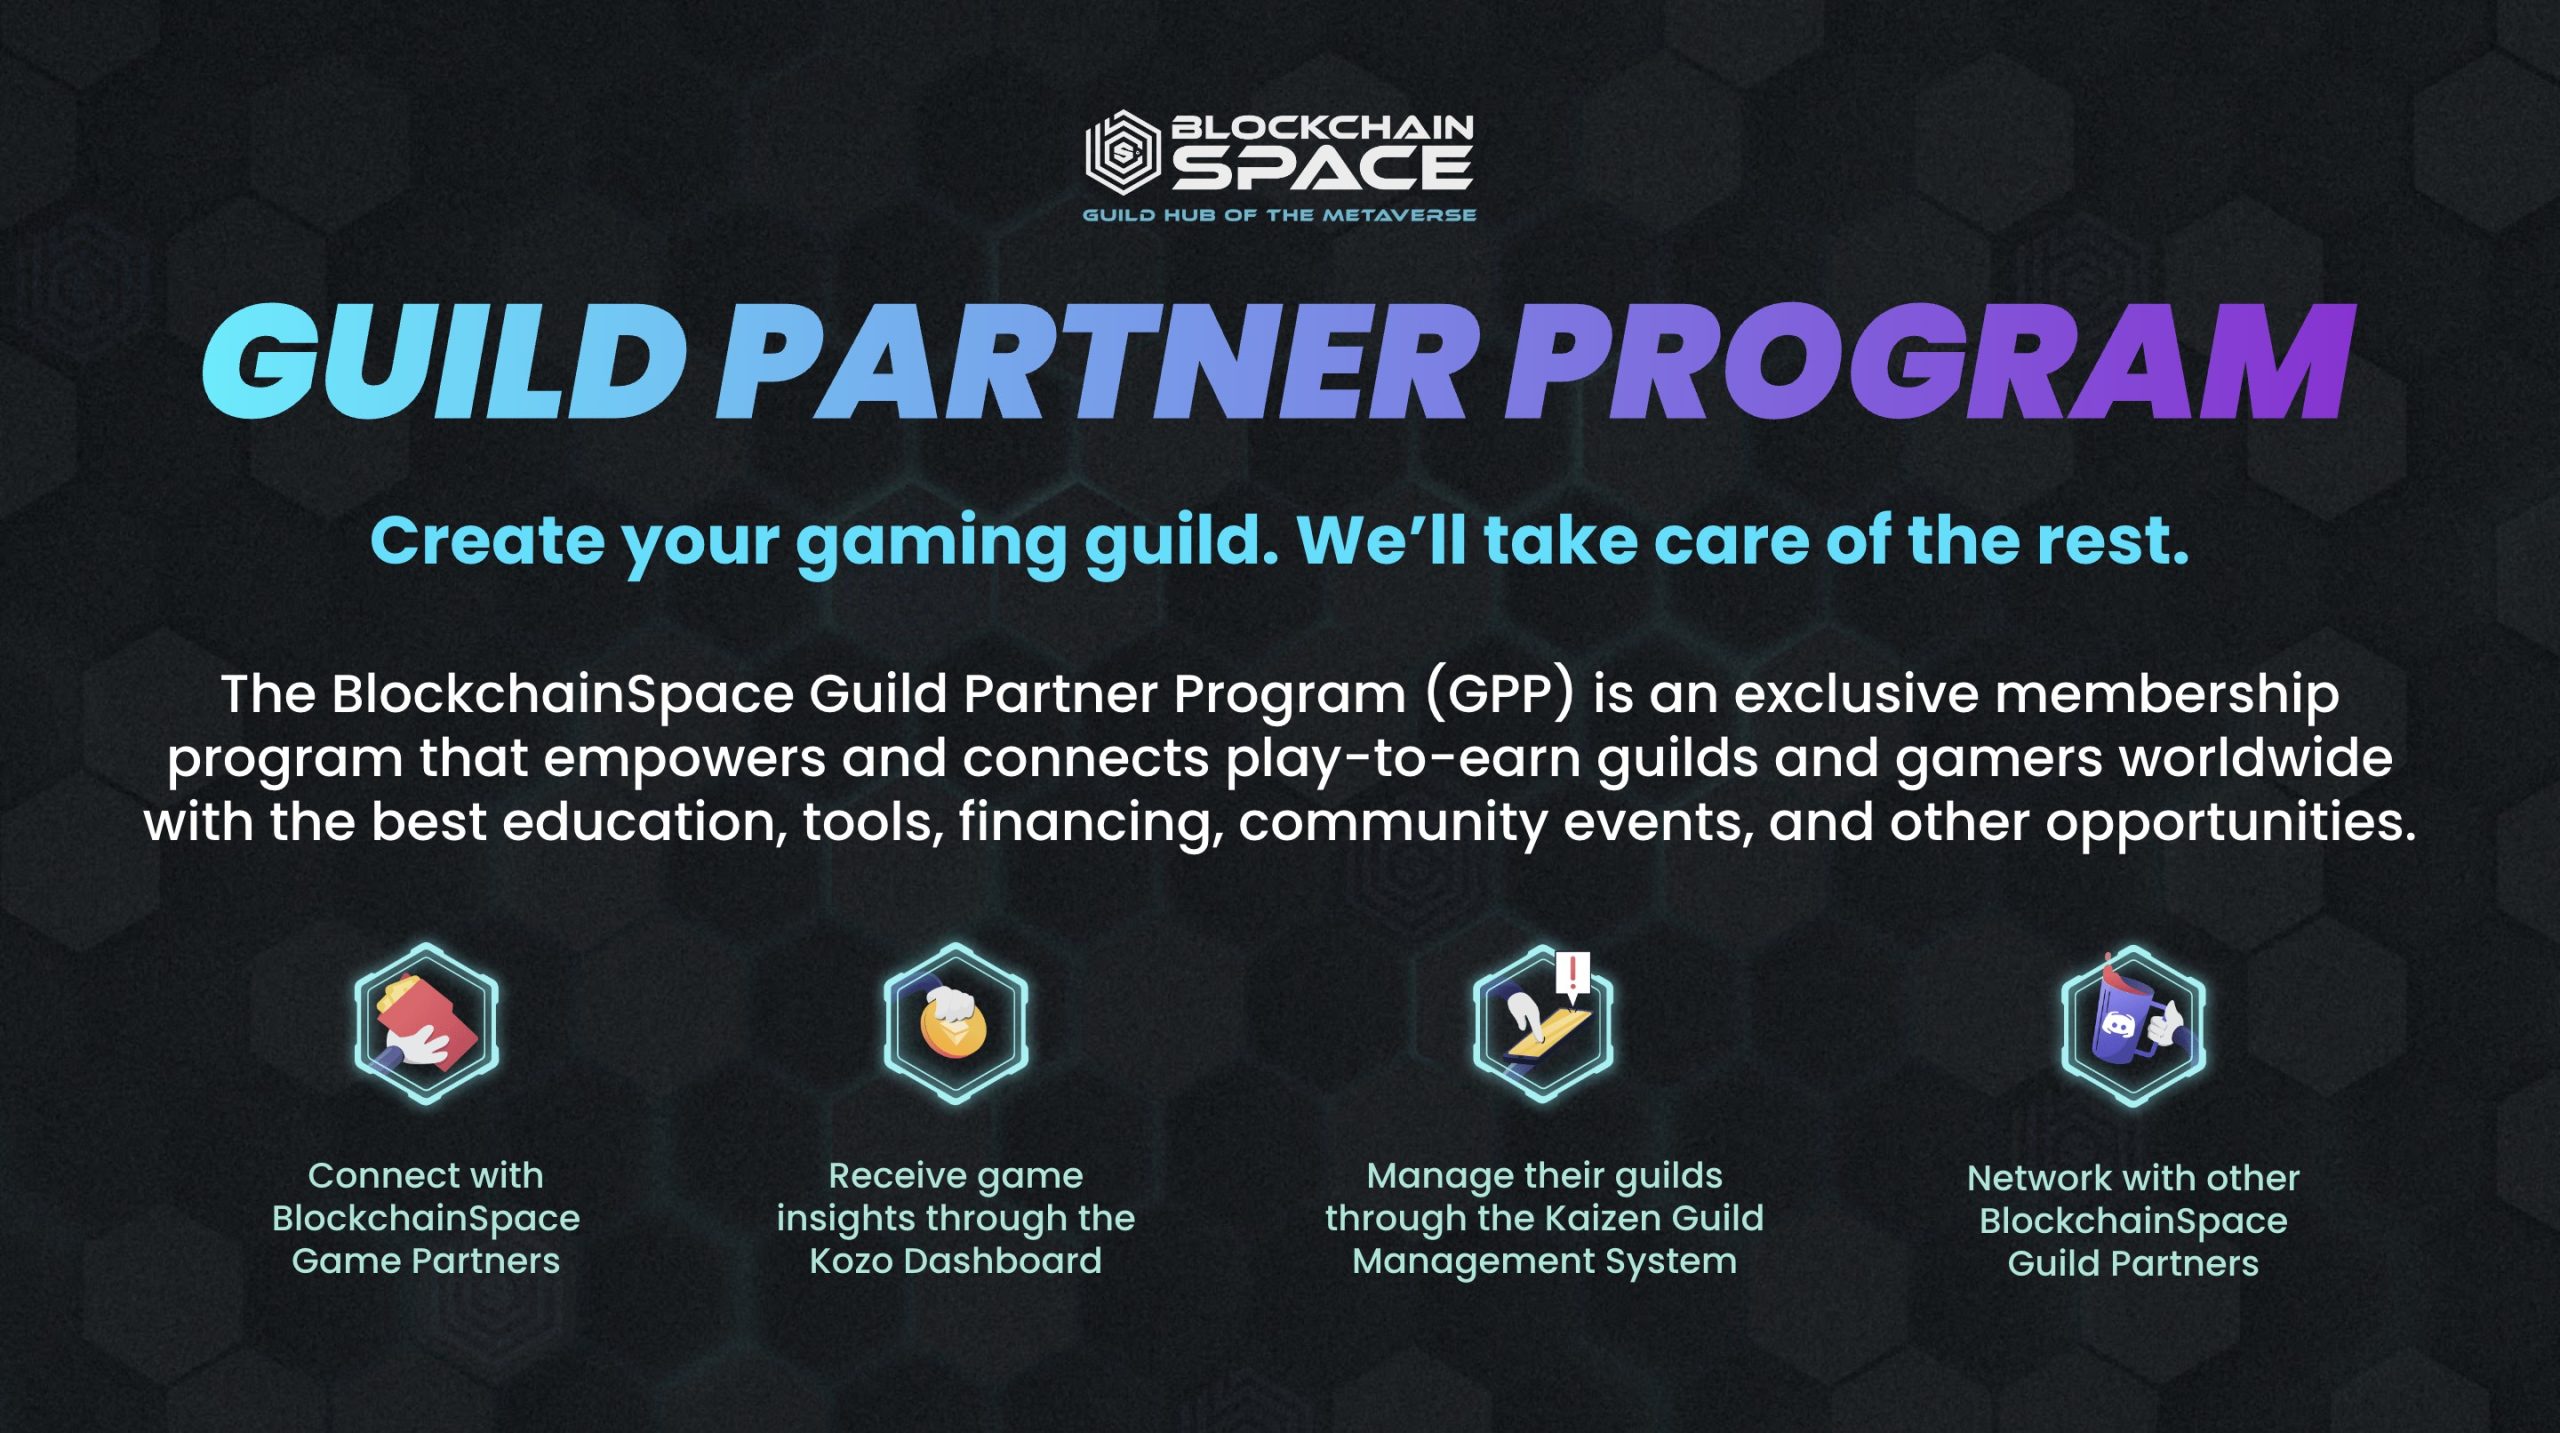 BlockchainSpace offers tools to grow P2E Guilds through the Guild Partner Program